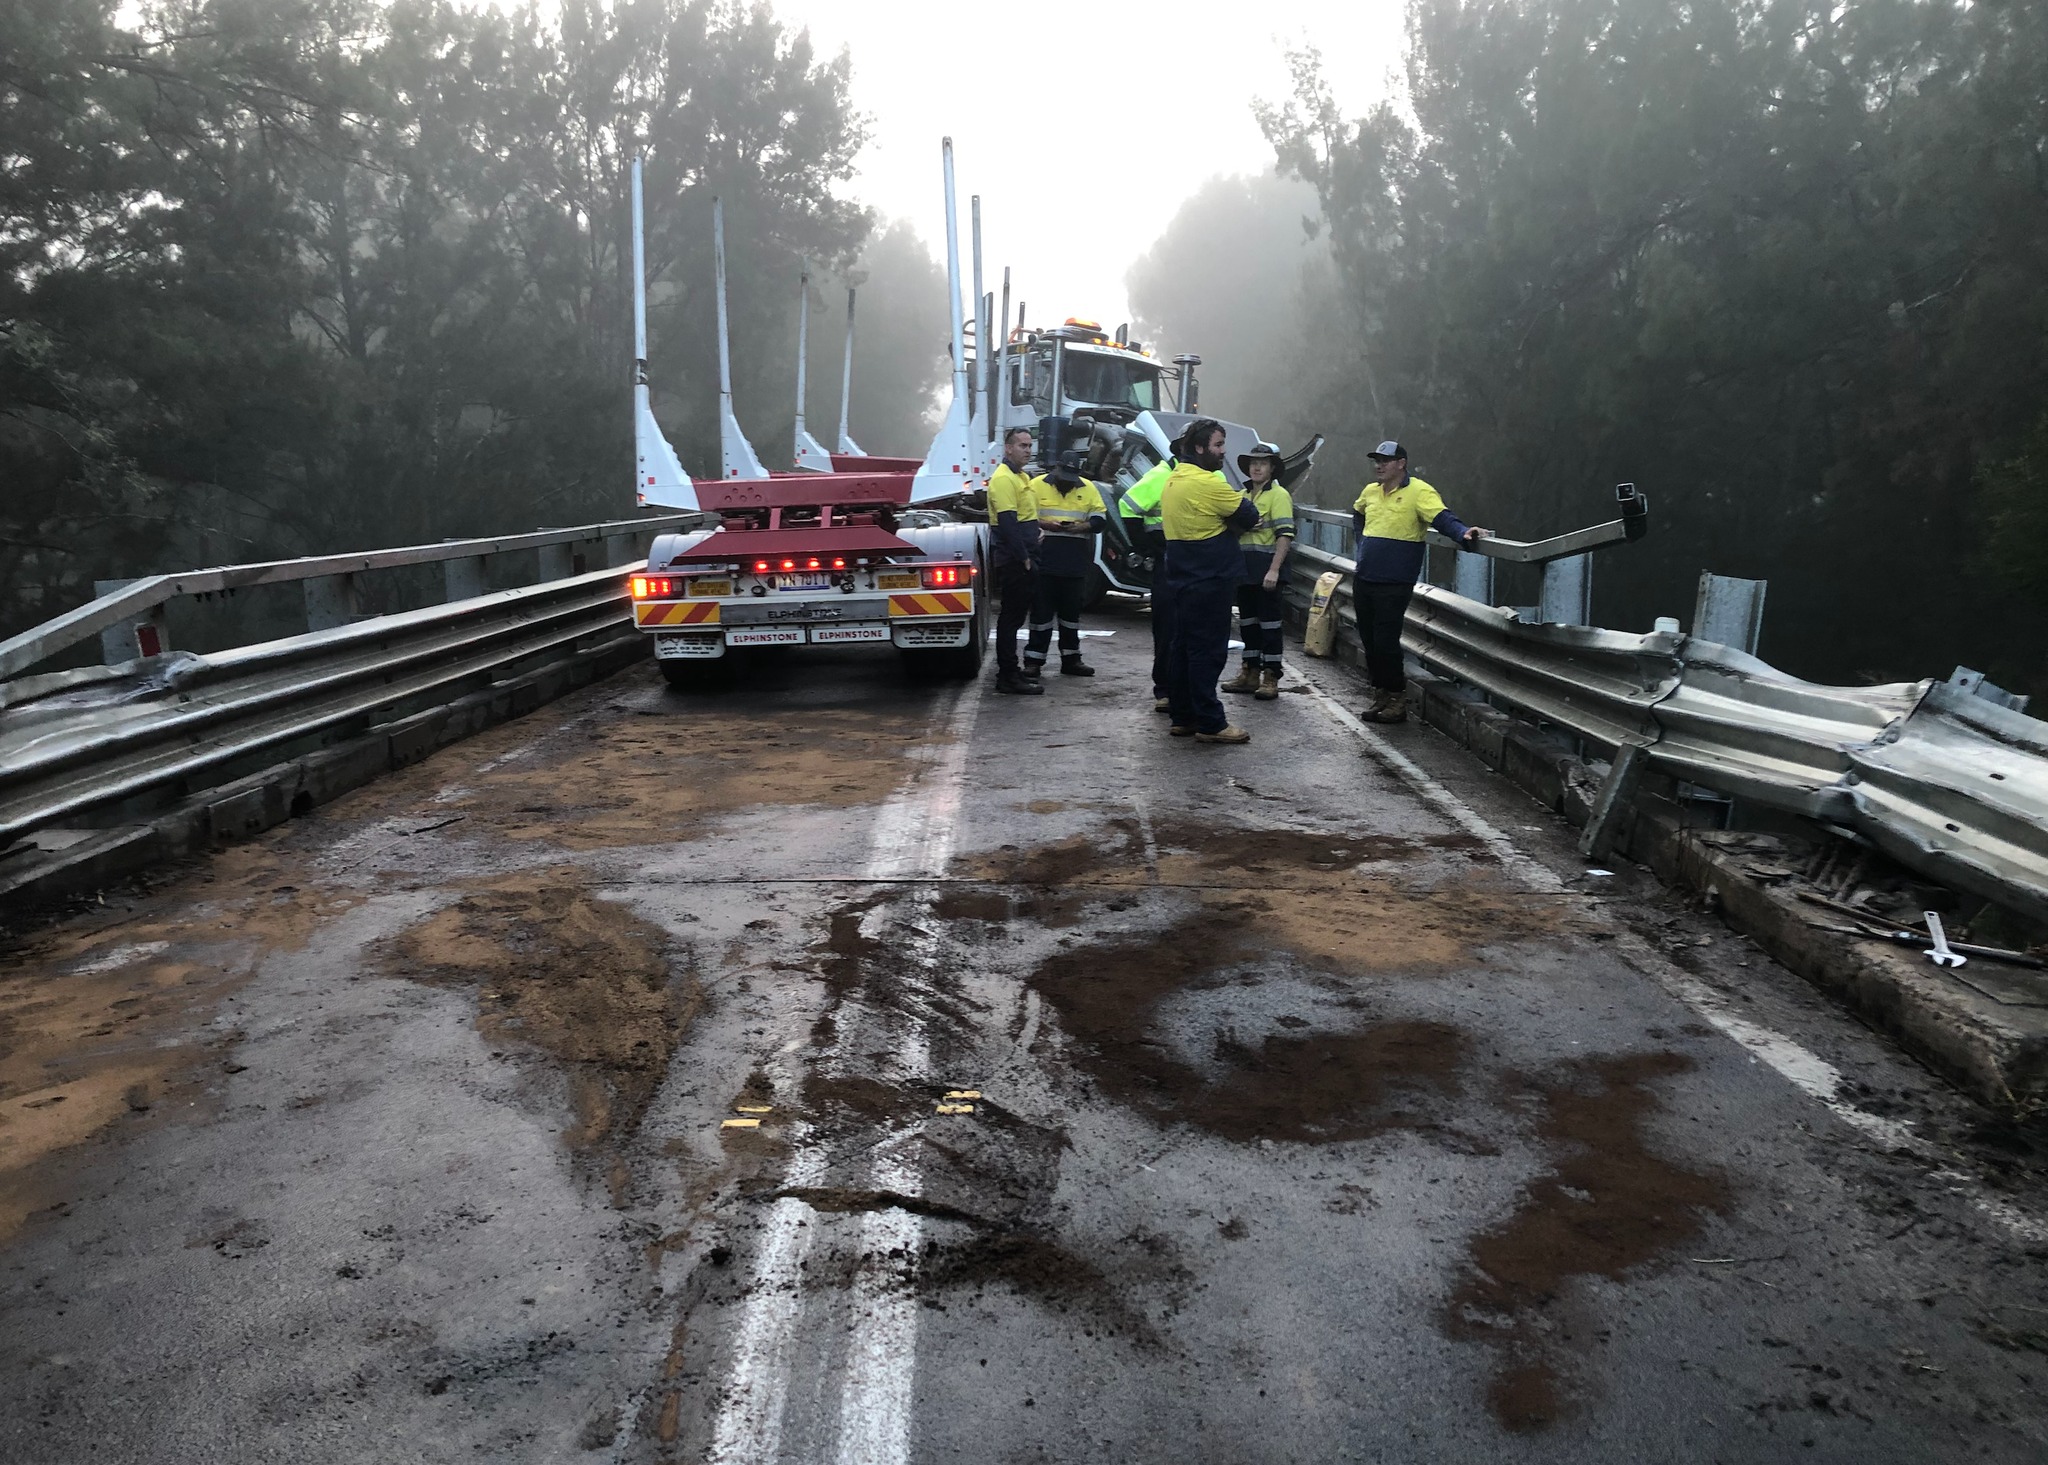 Brogo Bridge crash highlights 'concerning' accessibility issues for Bega